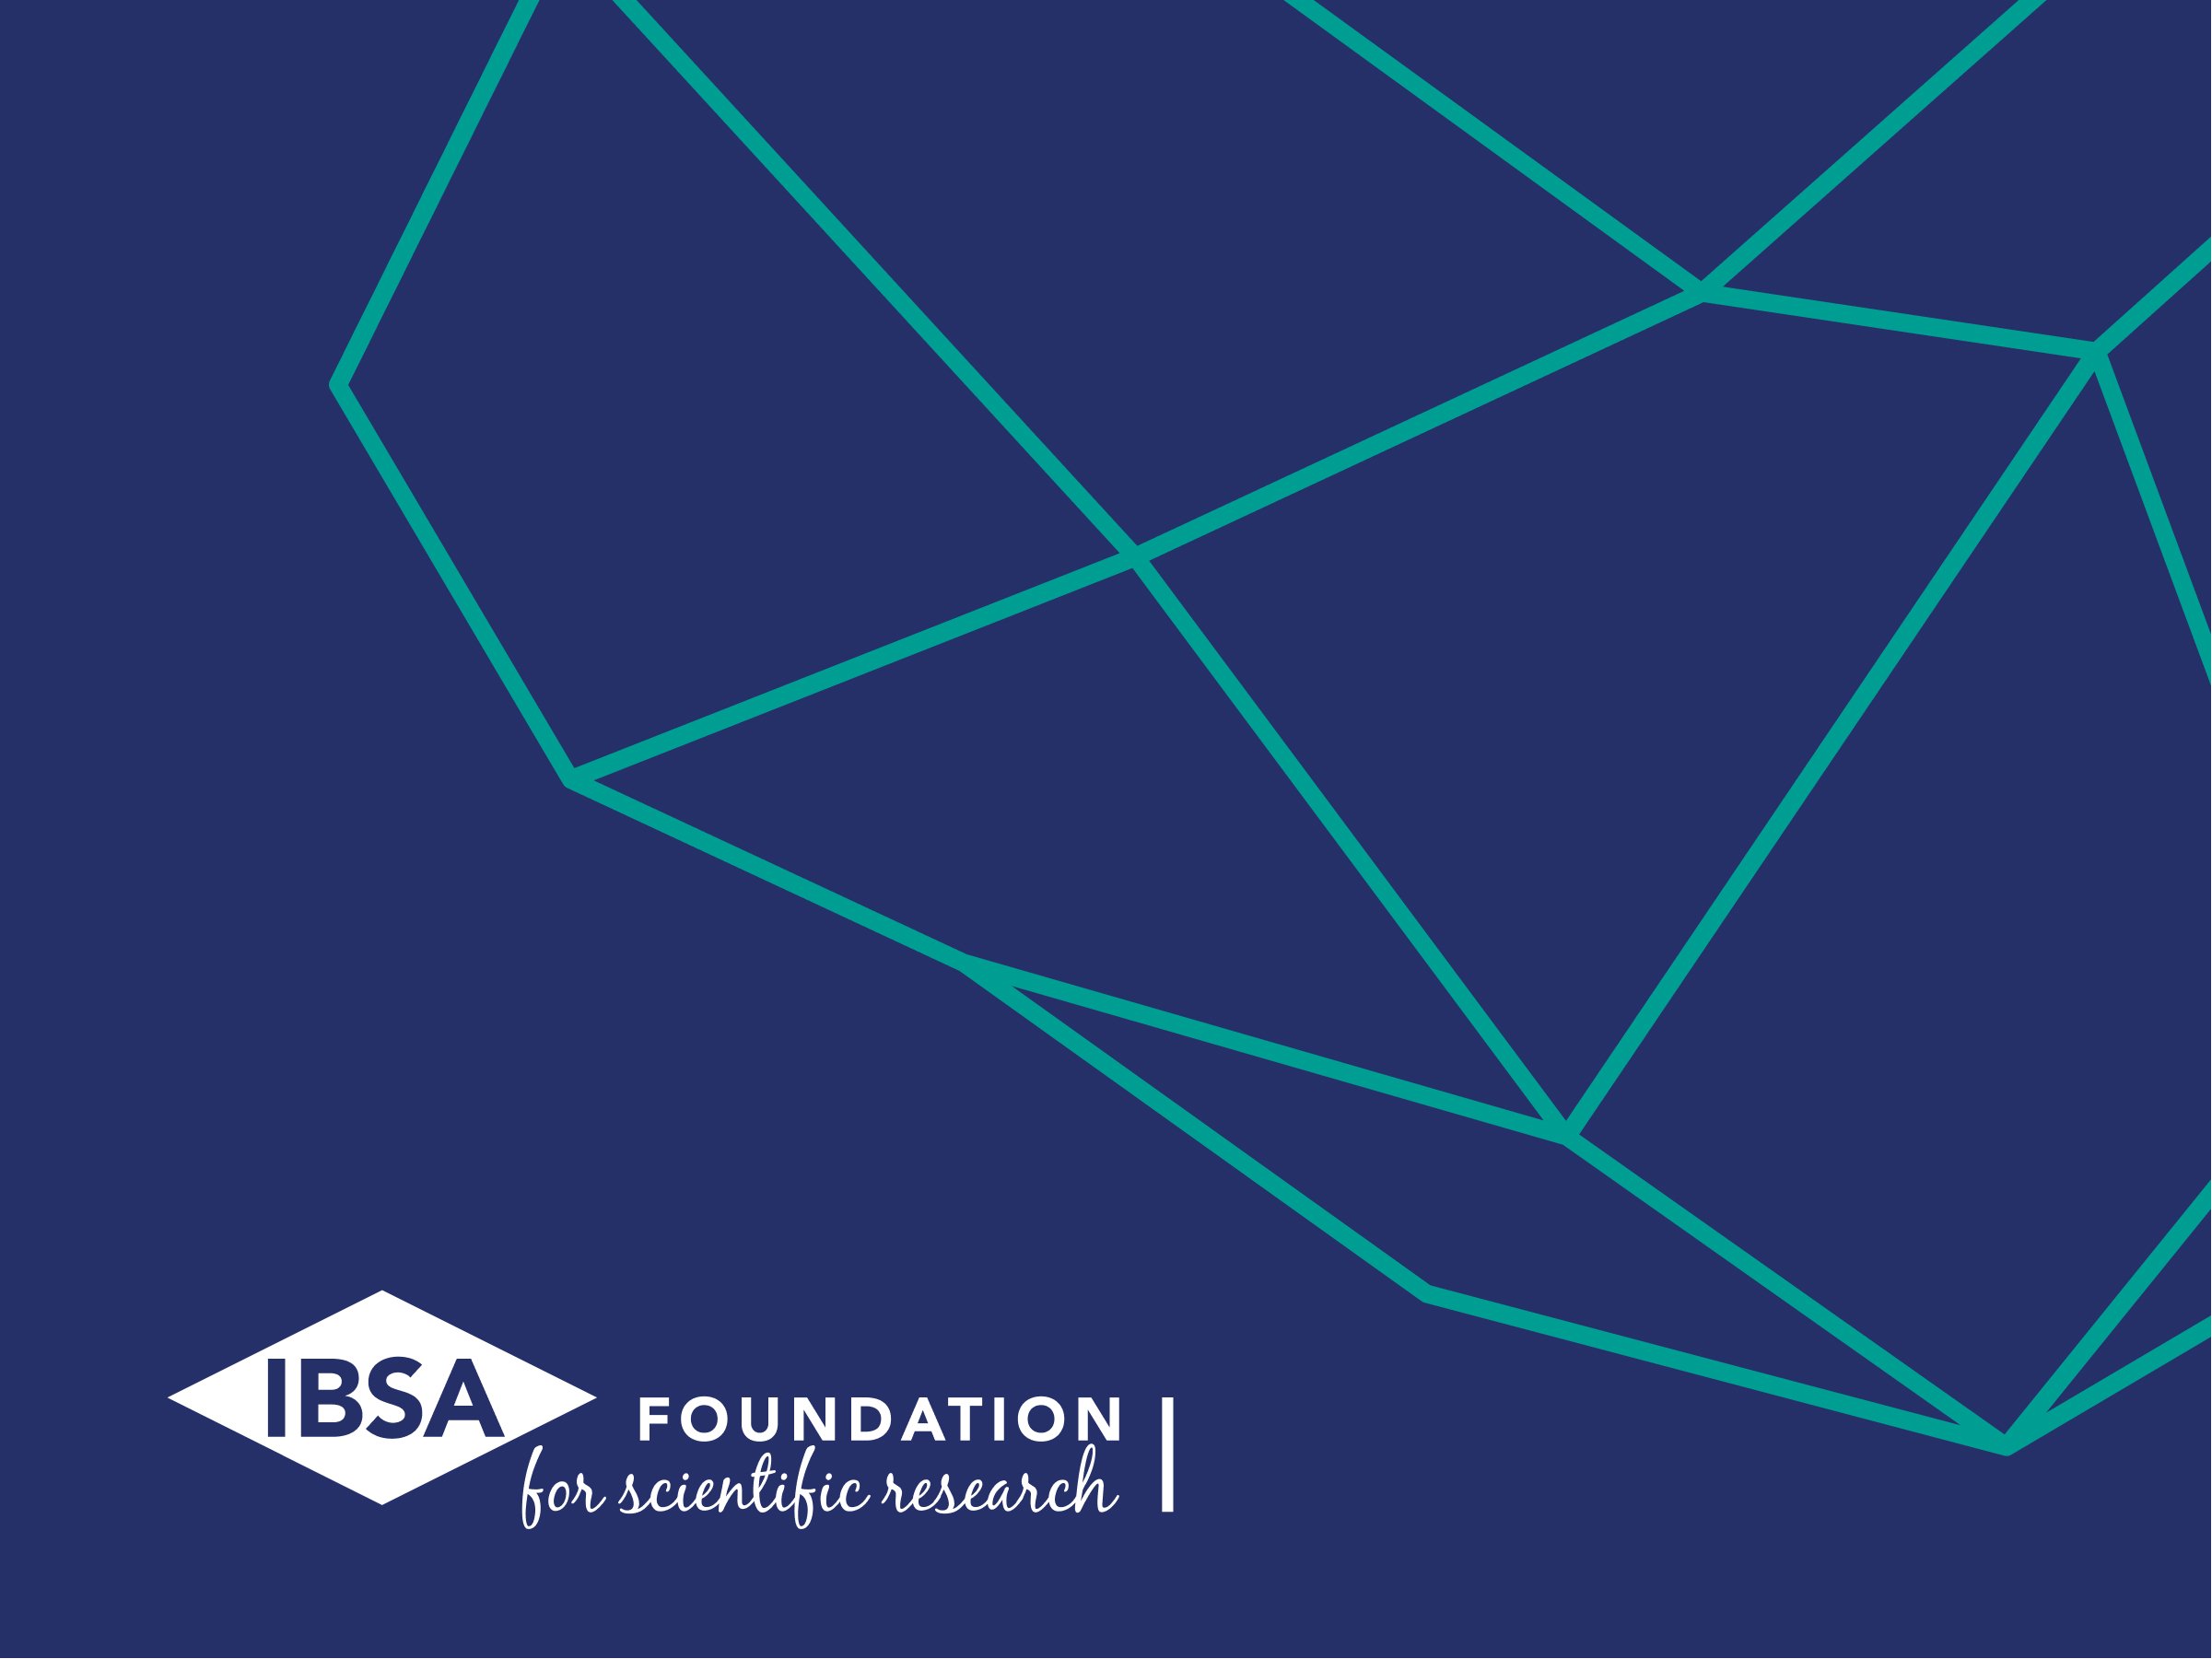 IBSA Foundation